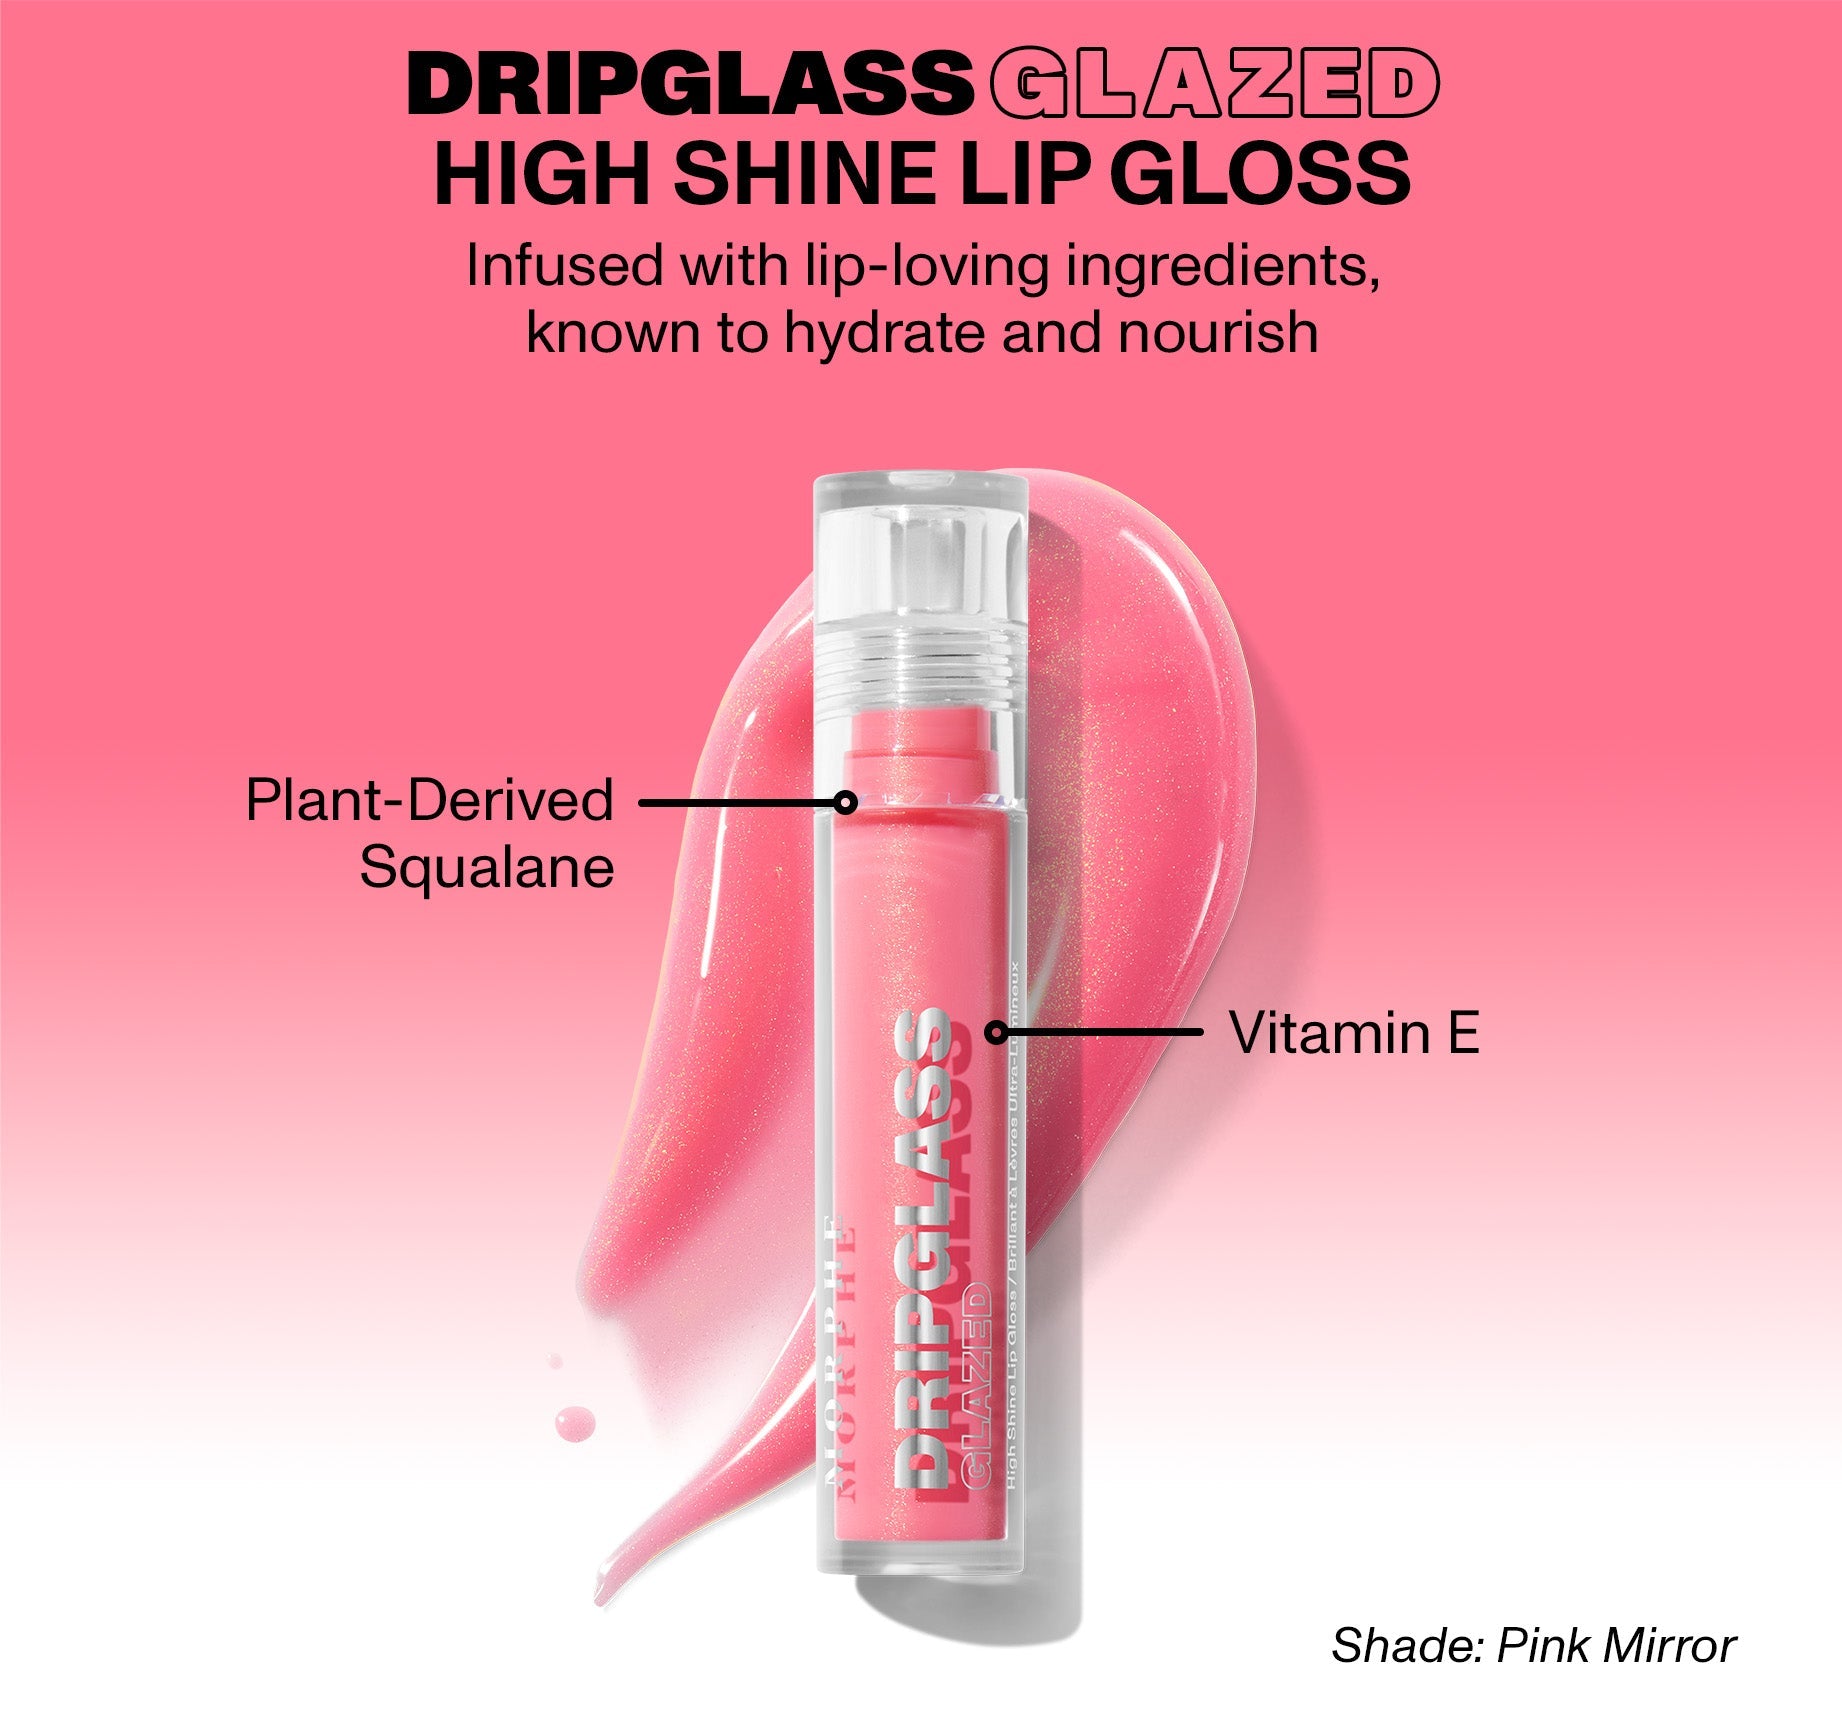 Dripglass Glazed High Shine Lip Gloss - Nude Gleam - Image 8